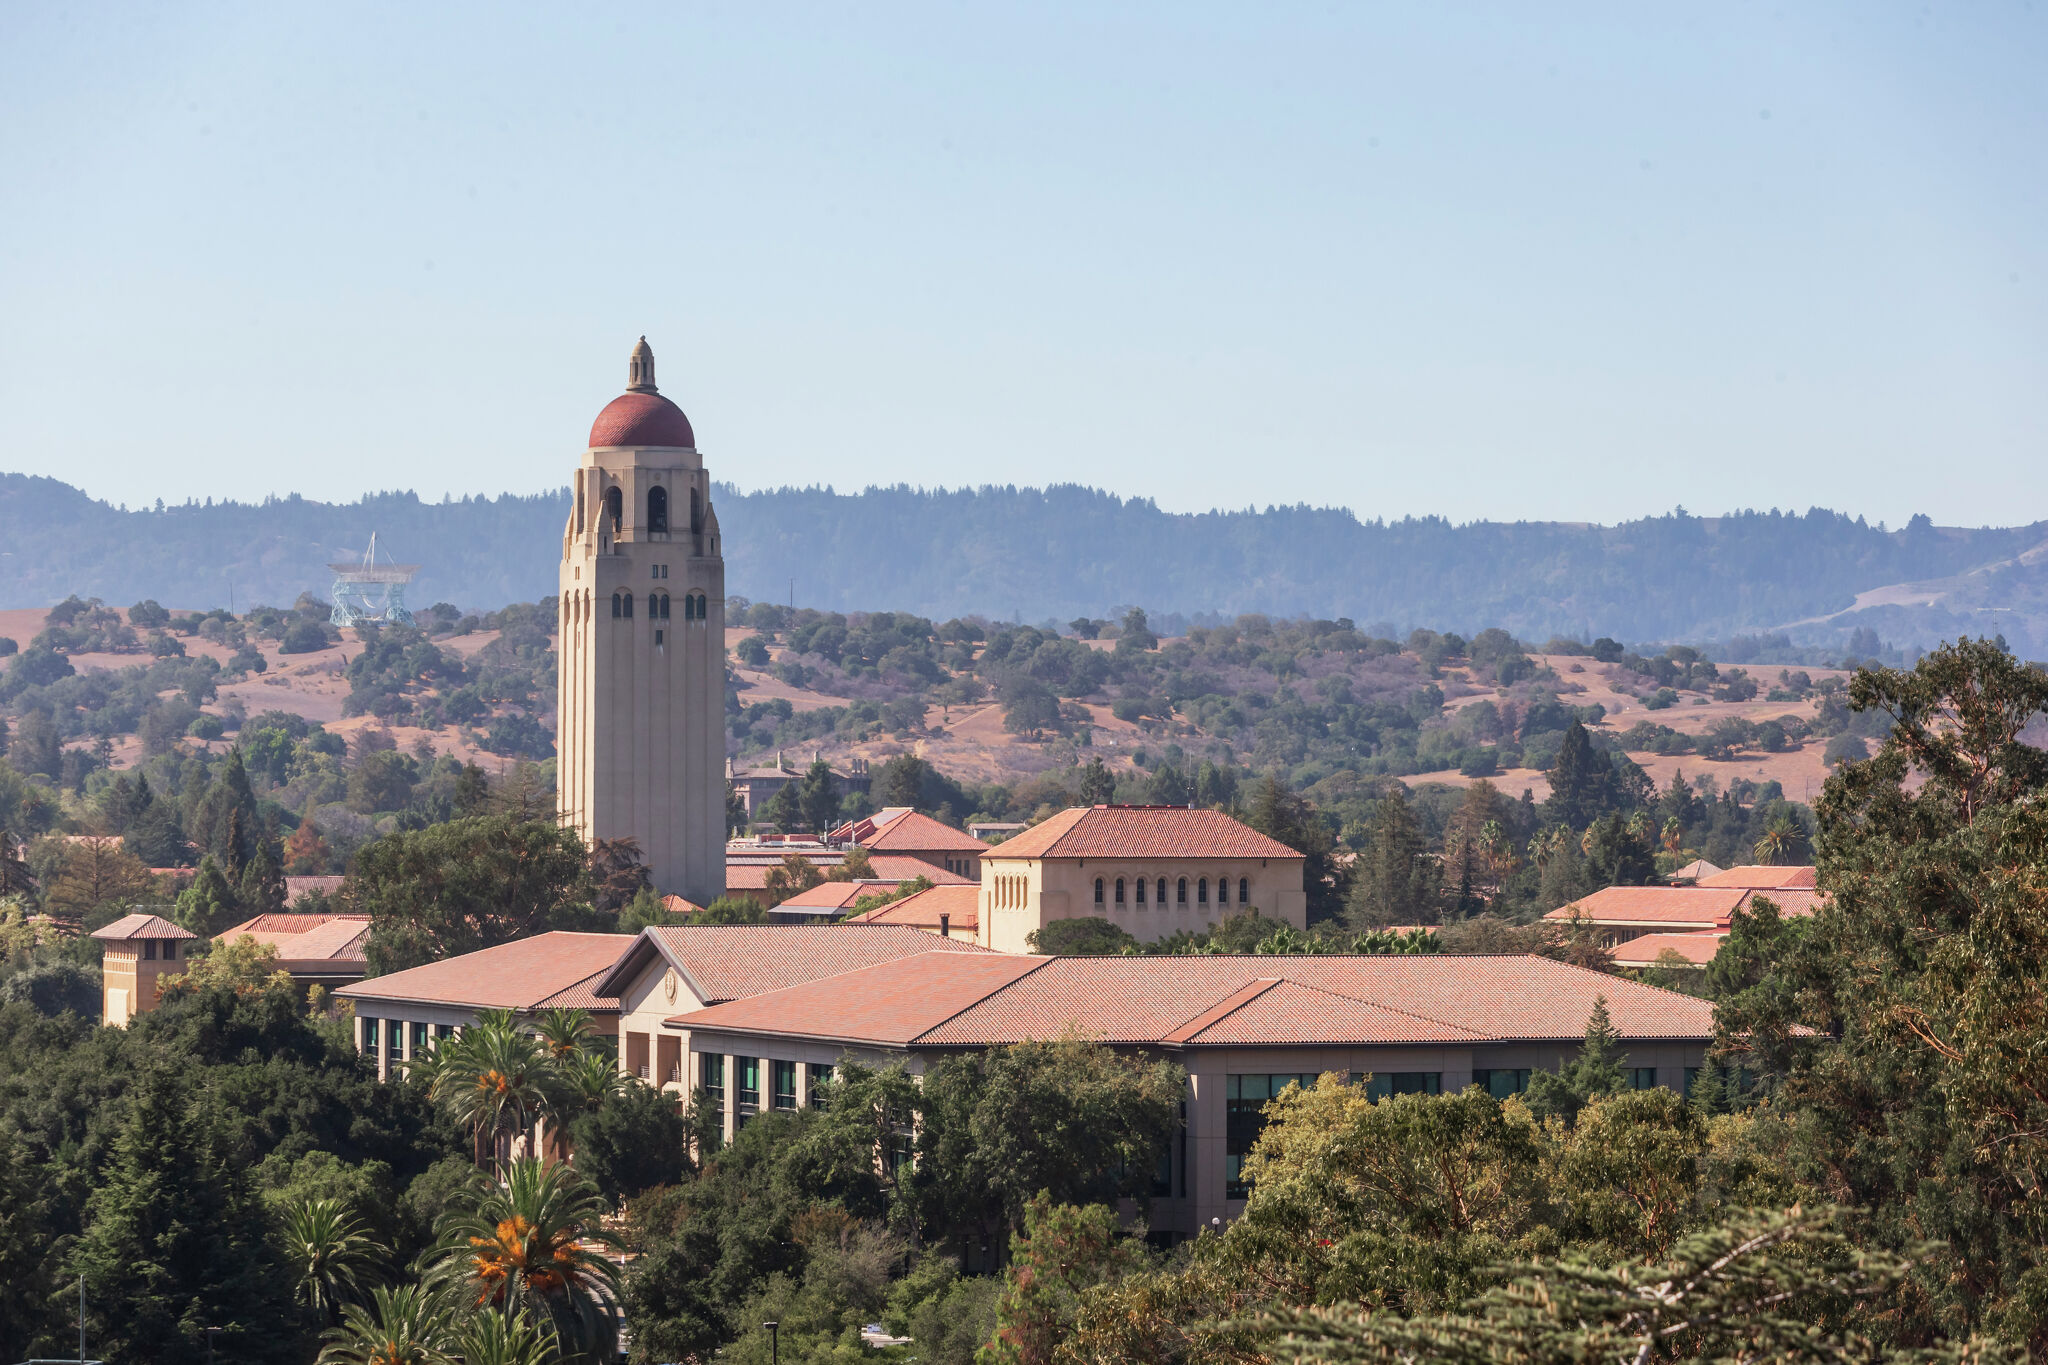 Conservative judge calls student 'appalling idiot' at Stanford talk